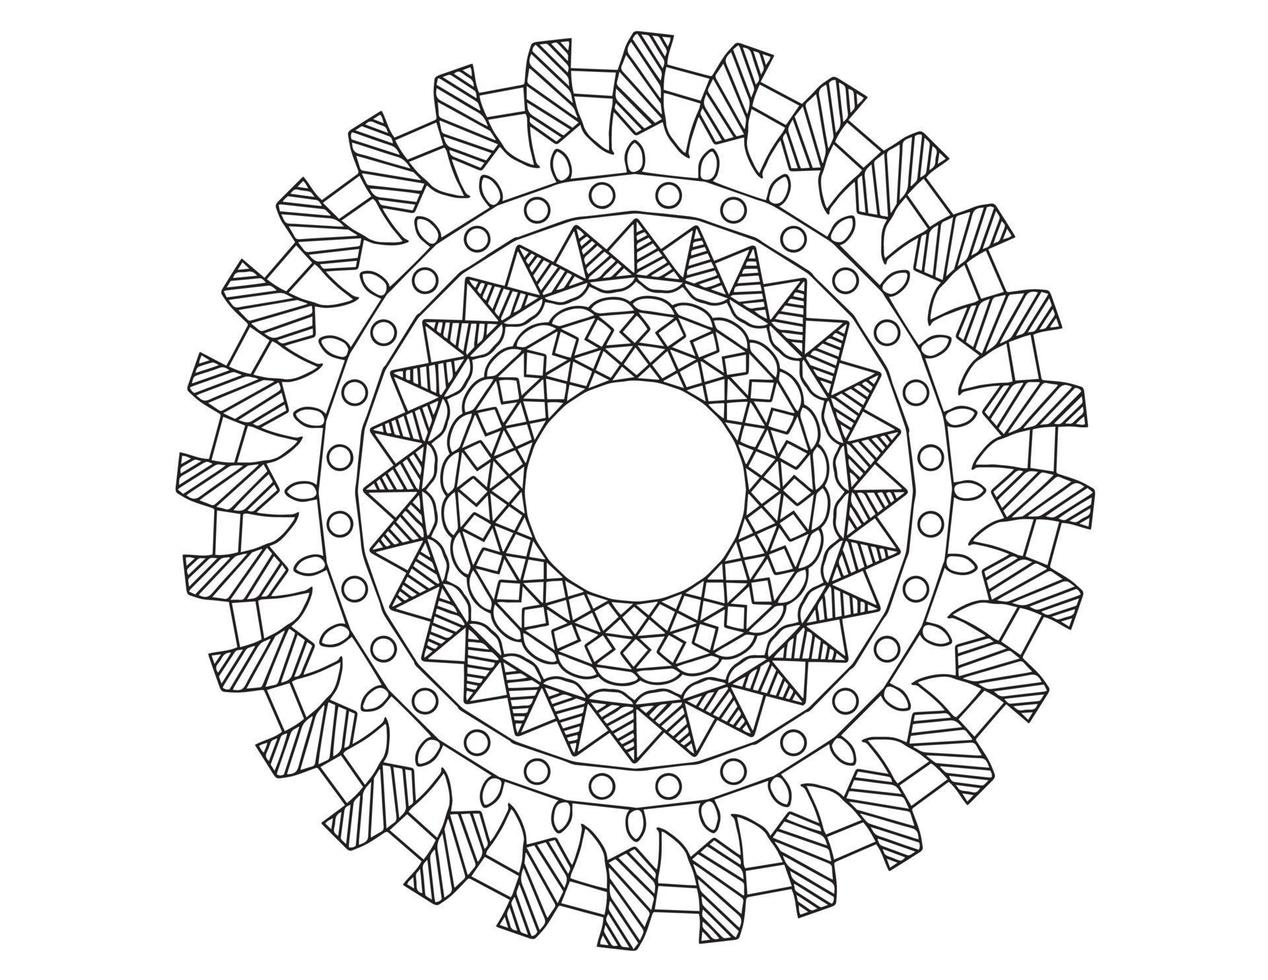 mandala zwart-wit, tatoeage, kleurplaat, cirkel, ornamenten, vector